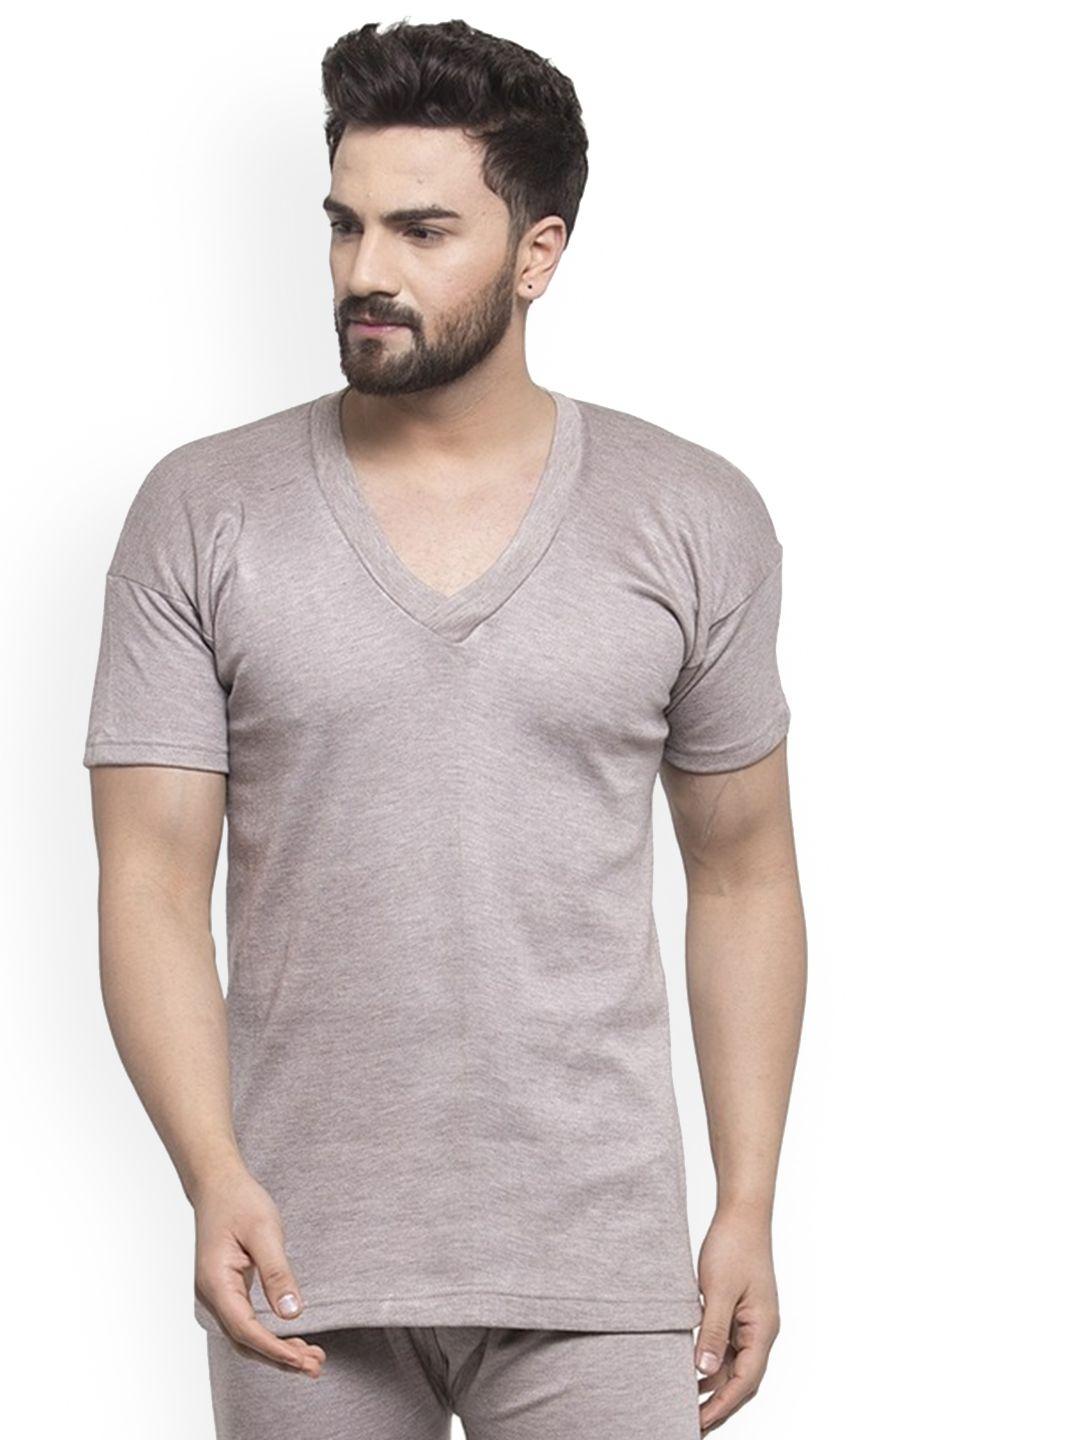 uzarus v-neck short sleeves cotton thermal top